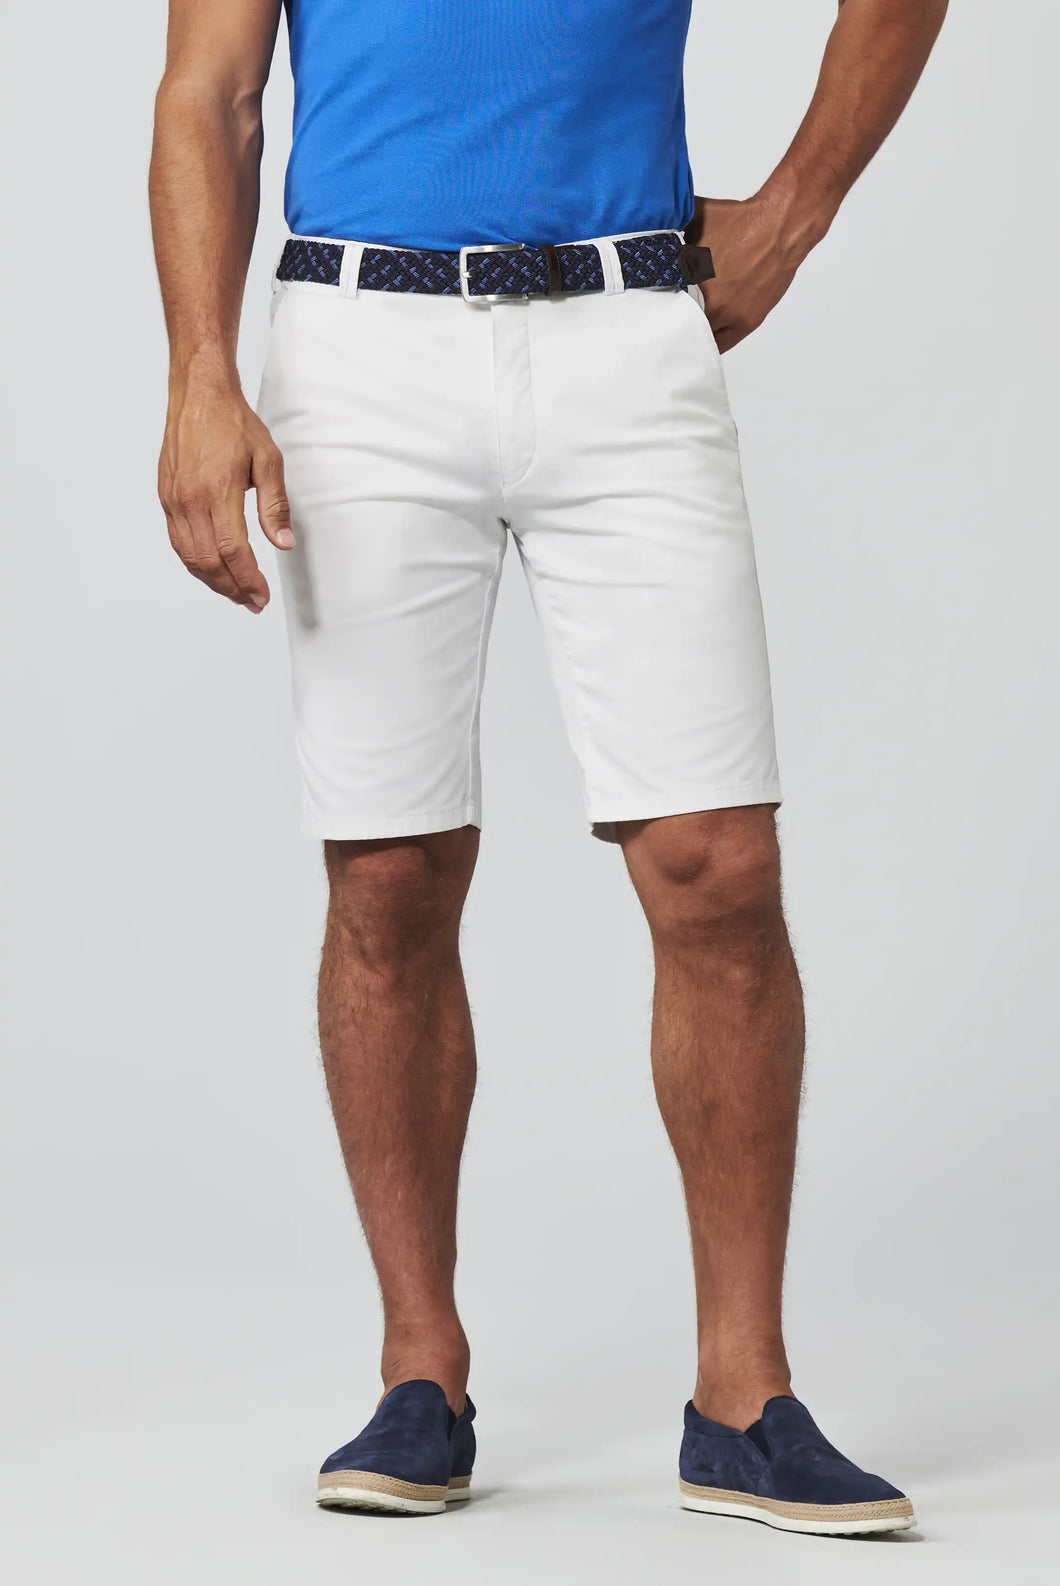 MEYER B-Palma Shorts - Men's Cotton Twill - White